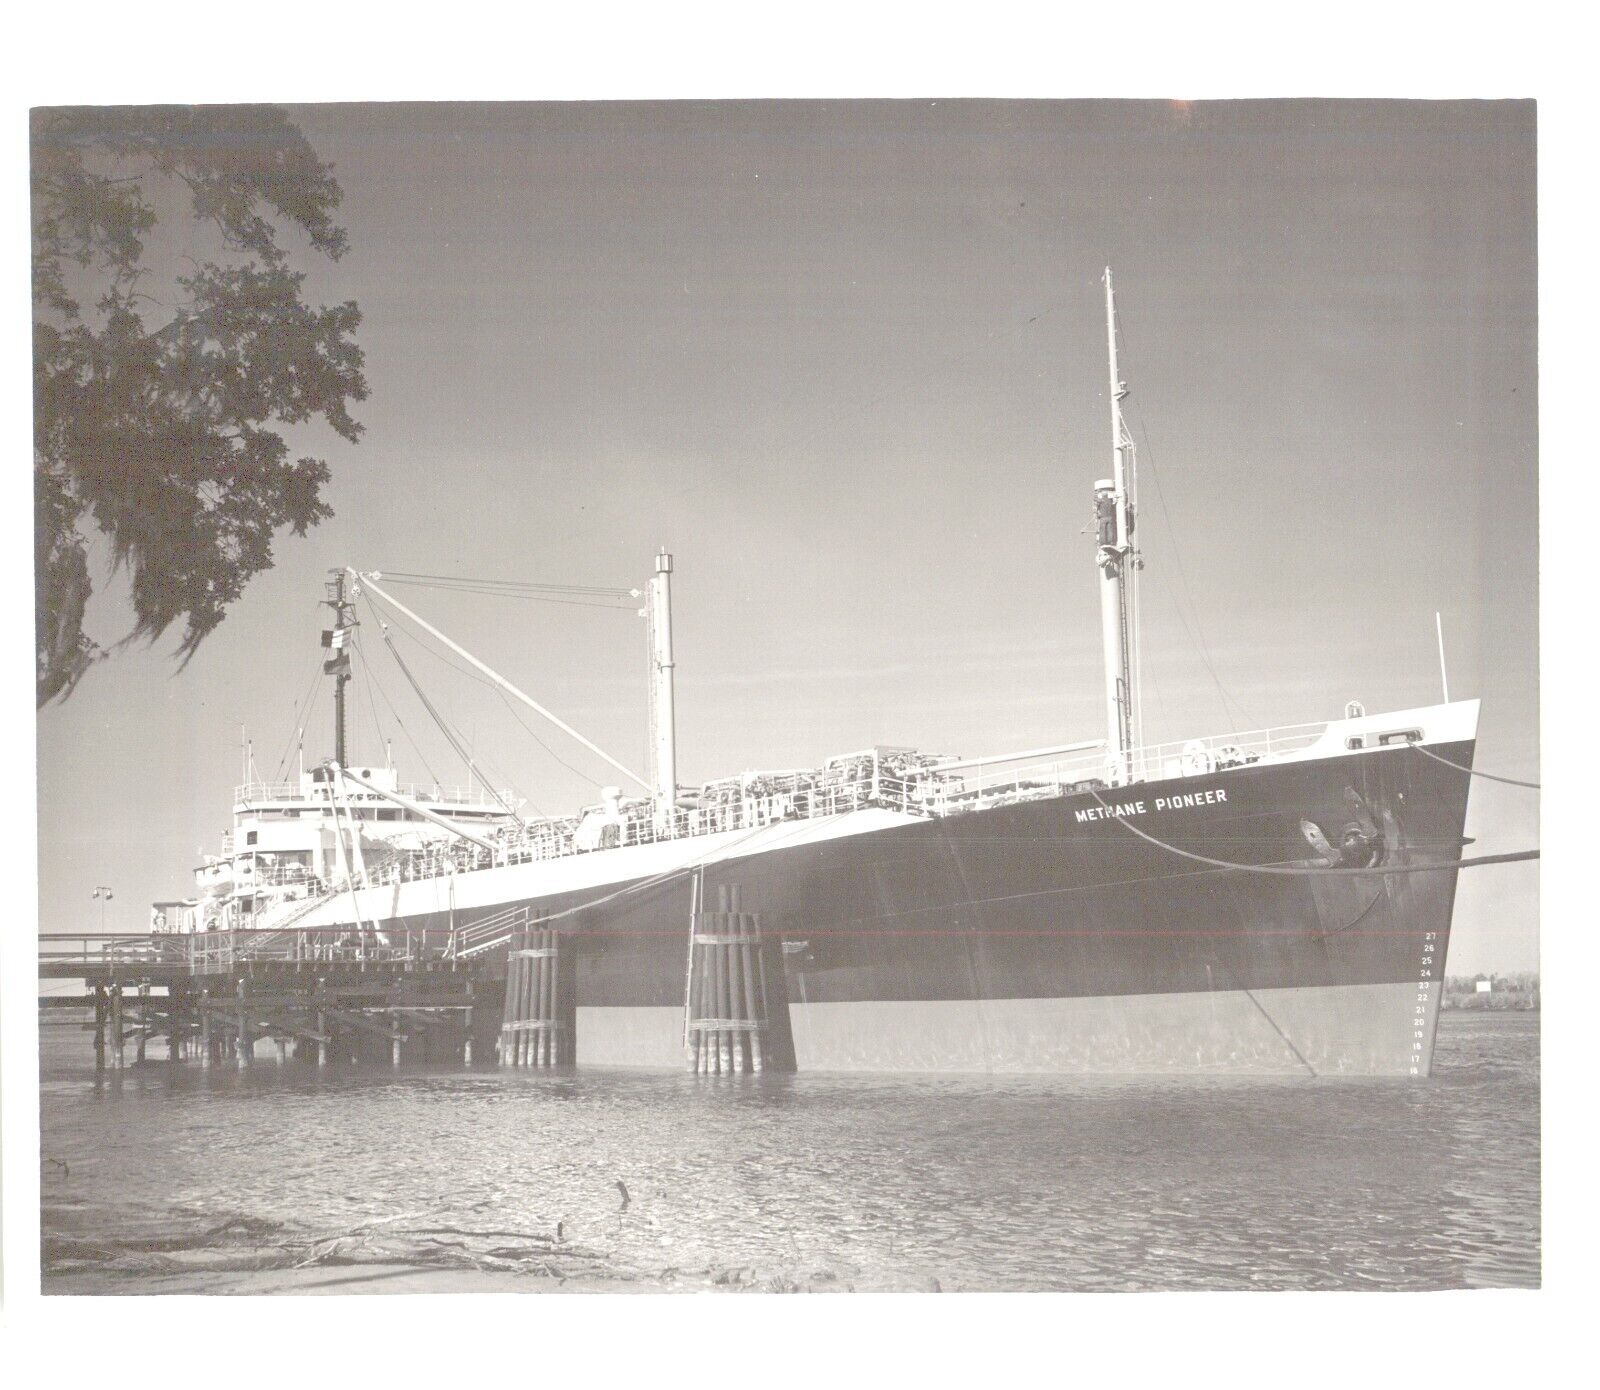 Methane Pioneer CARGO SHIP Docked at LAKE CHARLES Vintage 1959 Press Photo